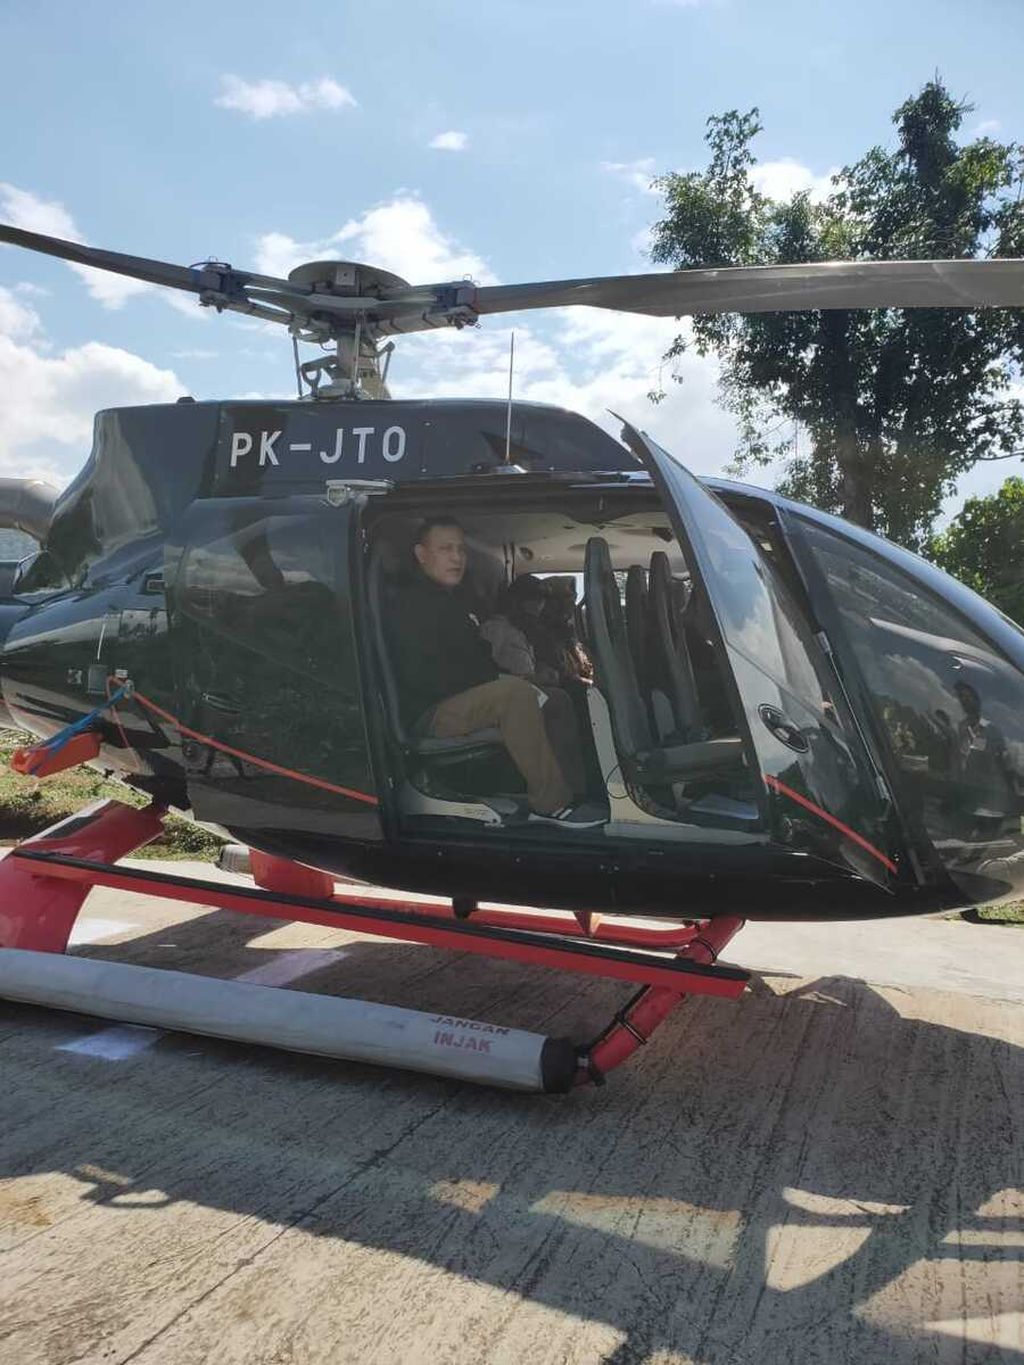 Ketua Komisi Pemberantasan Korupsi Firli Bahuri menaiki sebuah helikopter untuk keperluan pribadi menuju Baturaja, Sumatera Selatan, Sabtu (20/6/2020). Diduga perilaku tersebut melanggar kode etik pimpinan KPK yang dilarang bergaya hidup mewah.